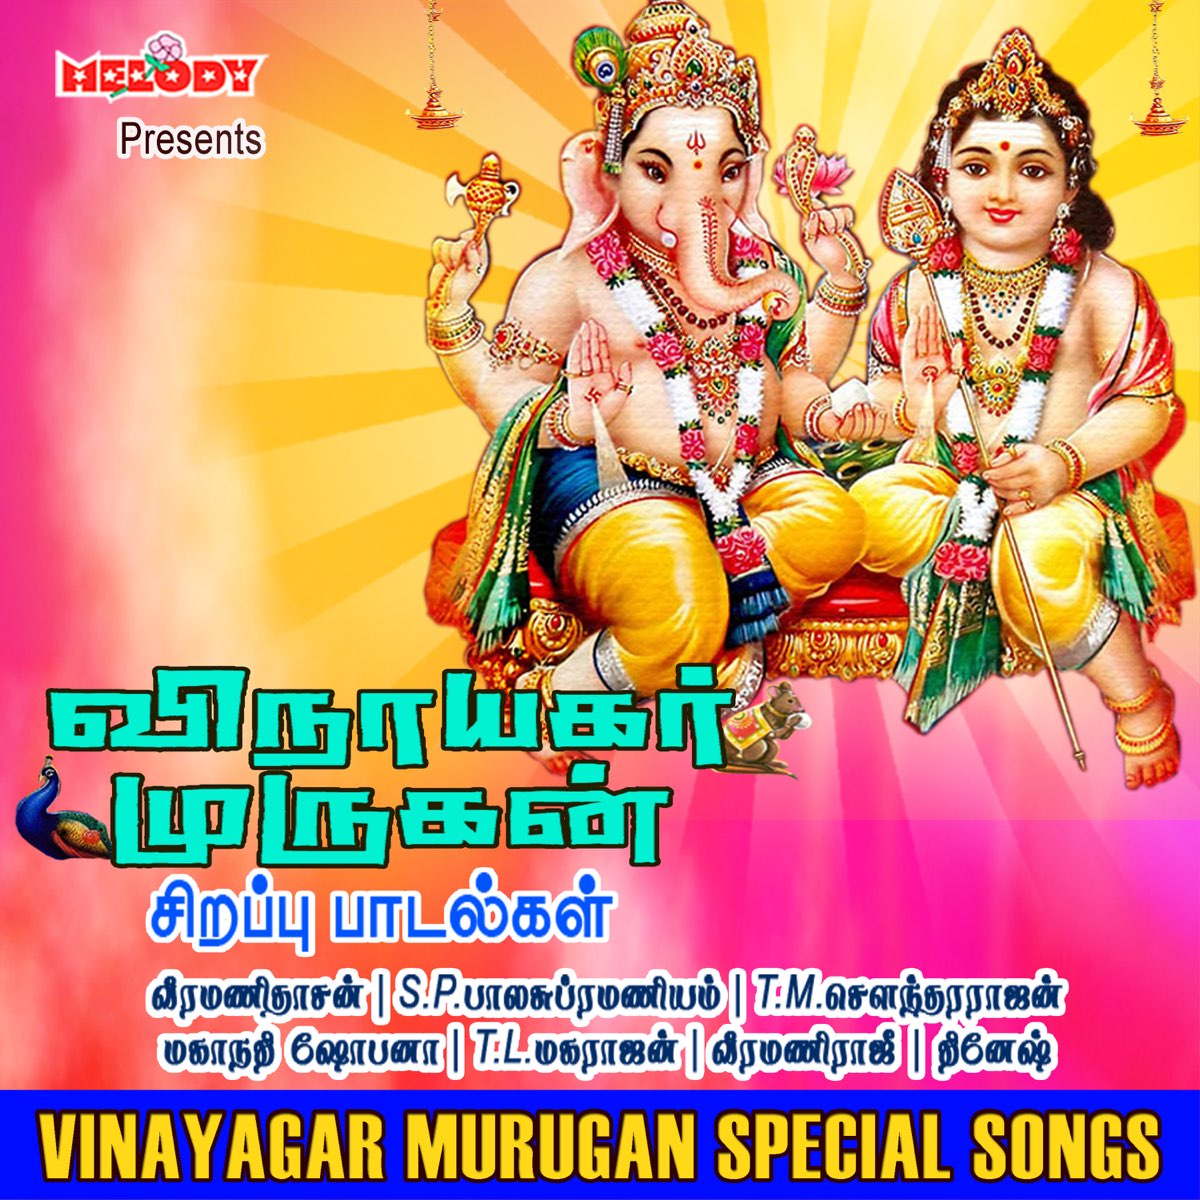 Vinayagar Murugan Special Songs by Various Artists on Apple Music